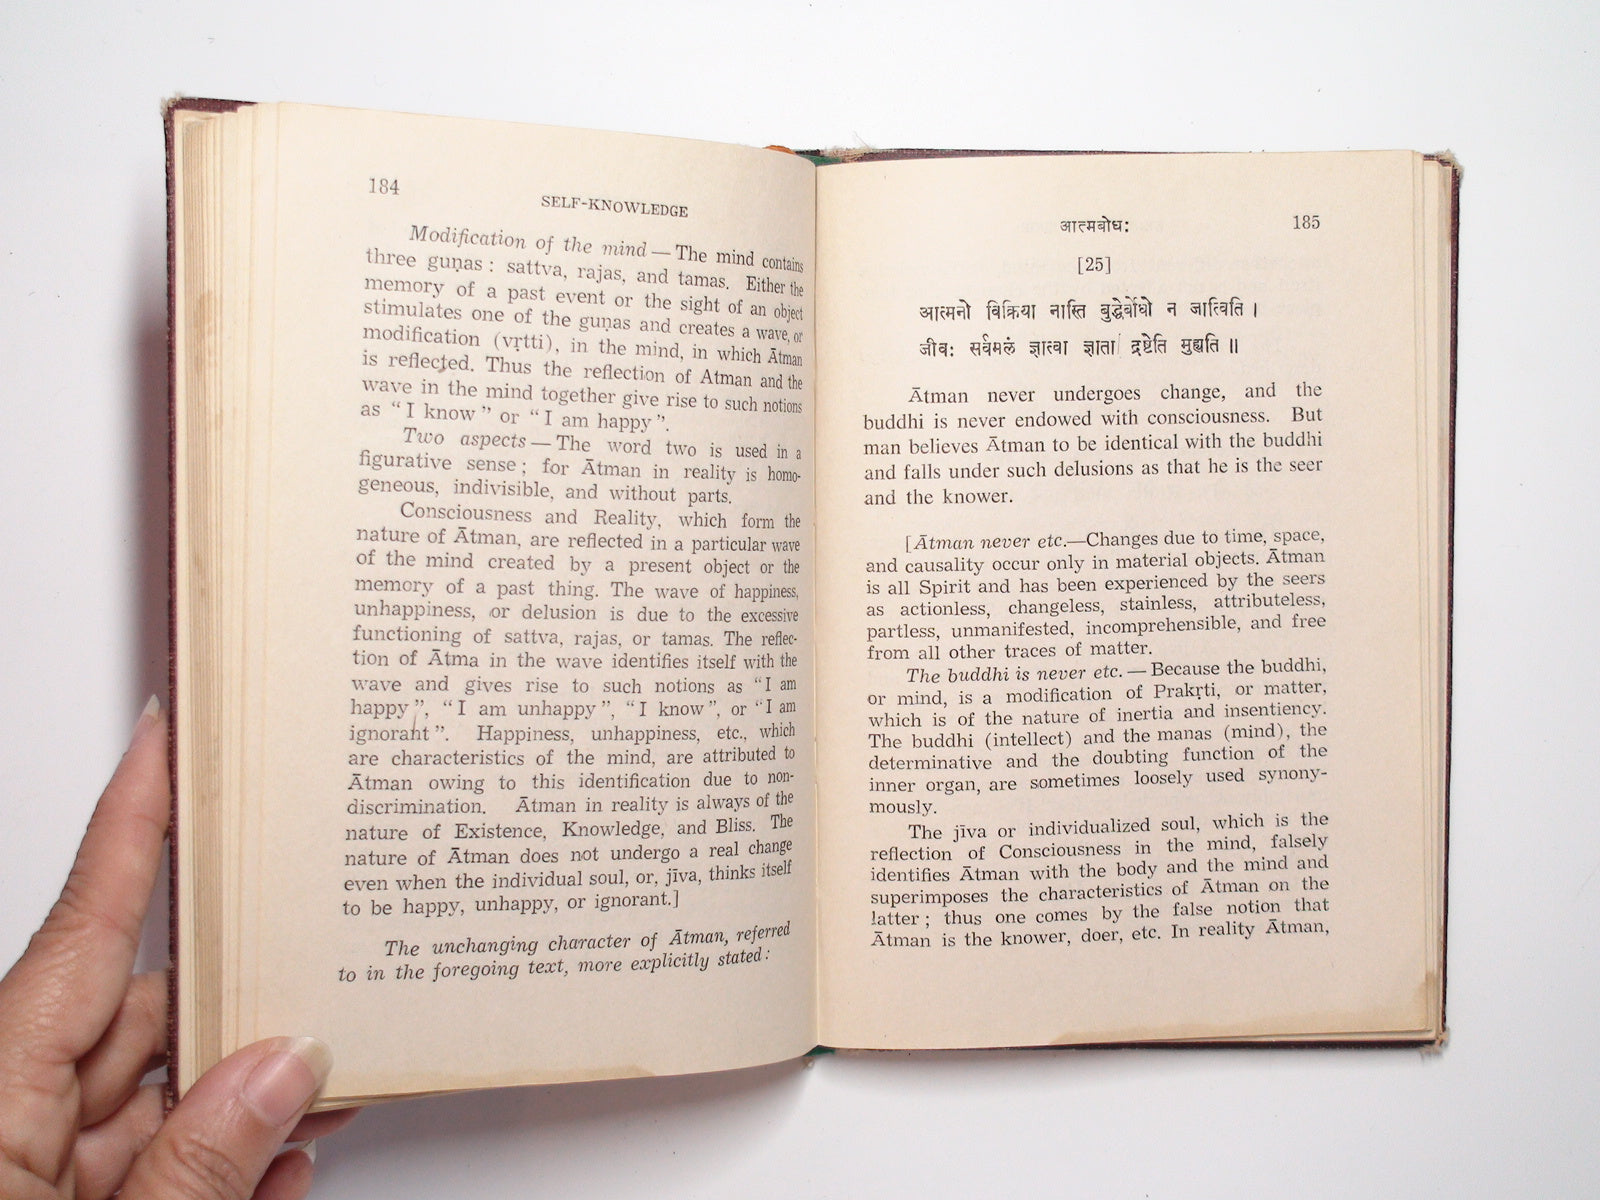 Self-Knowledge, An Eng. Translation of Sankaracarya's Atmabodha, 1975